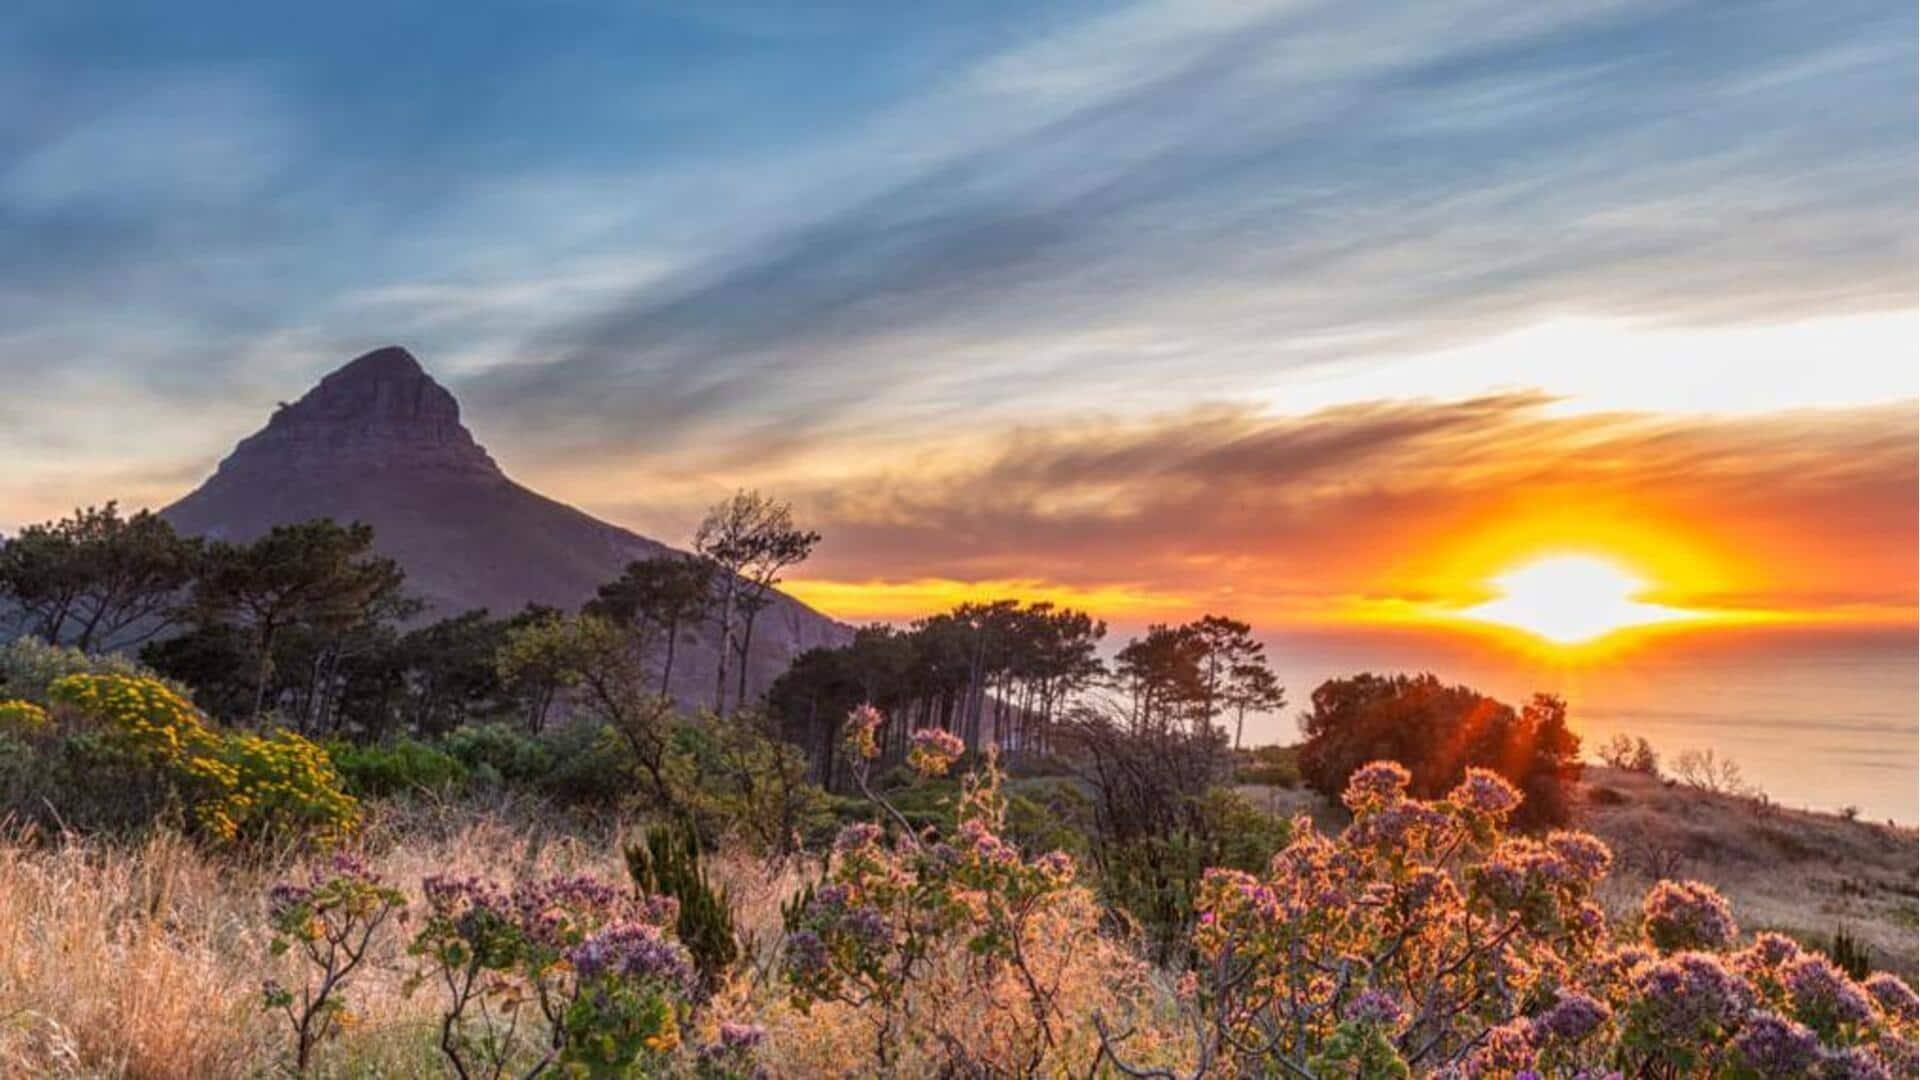 Panduan untuk menyaksikan kemegahan matahari terbenam Cape Town yang terbaik